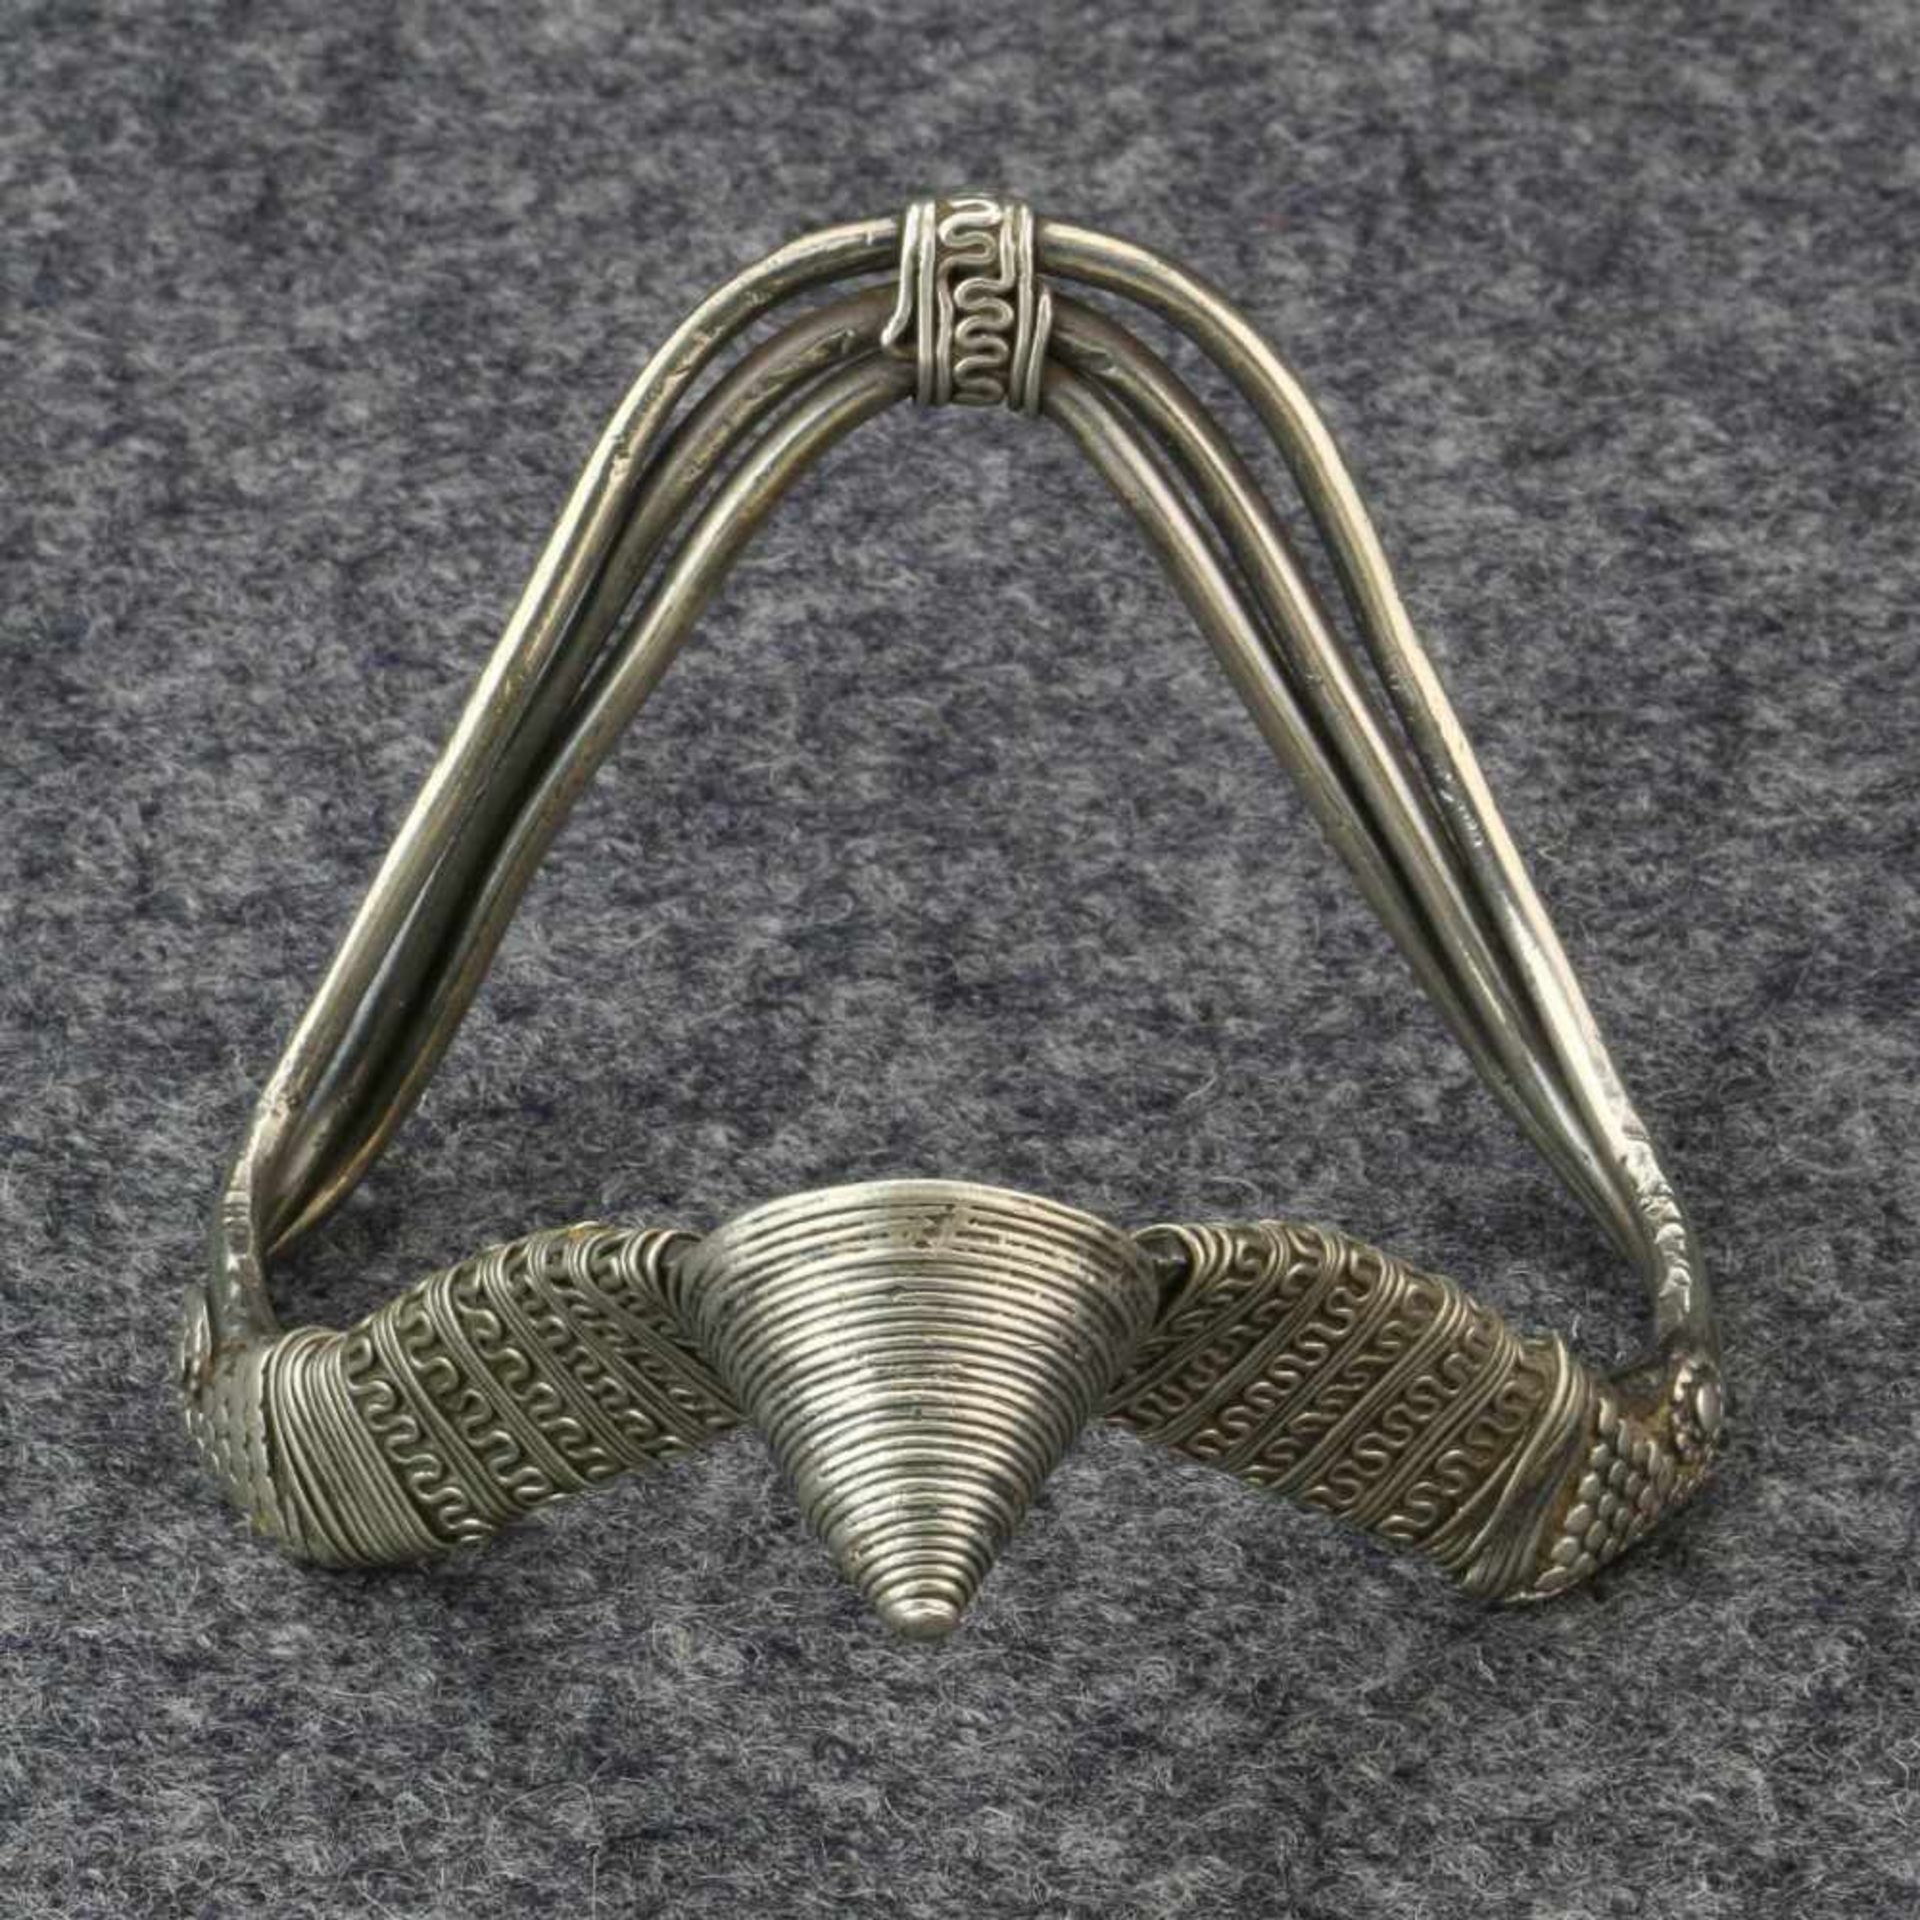 India, Maharashtra, Amravati region, Korku tribe, V-form bend silver armlet, ‘Vanki',with twisted-